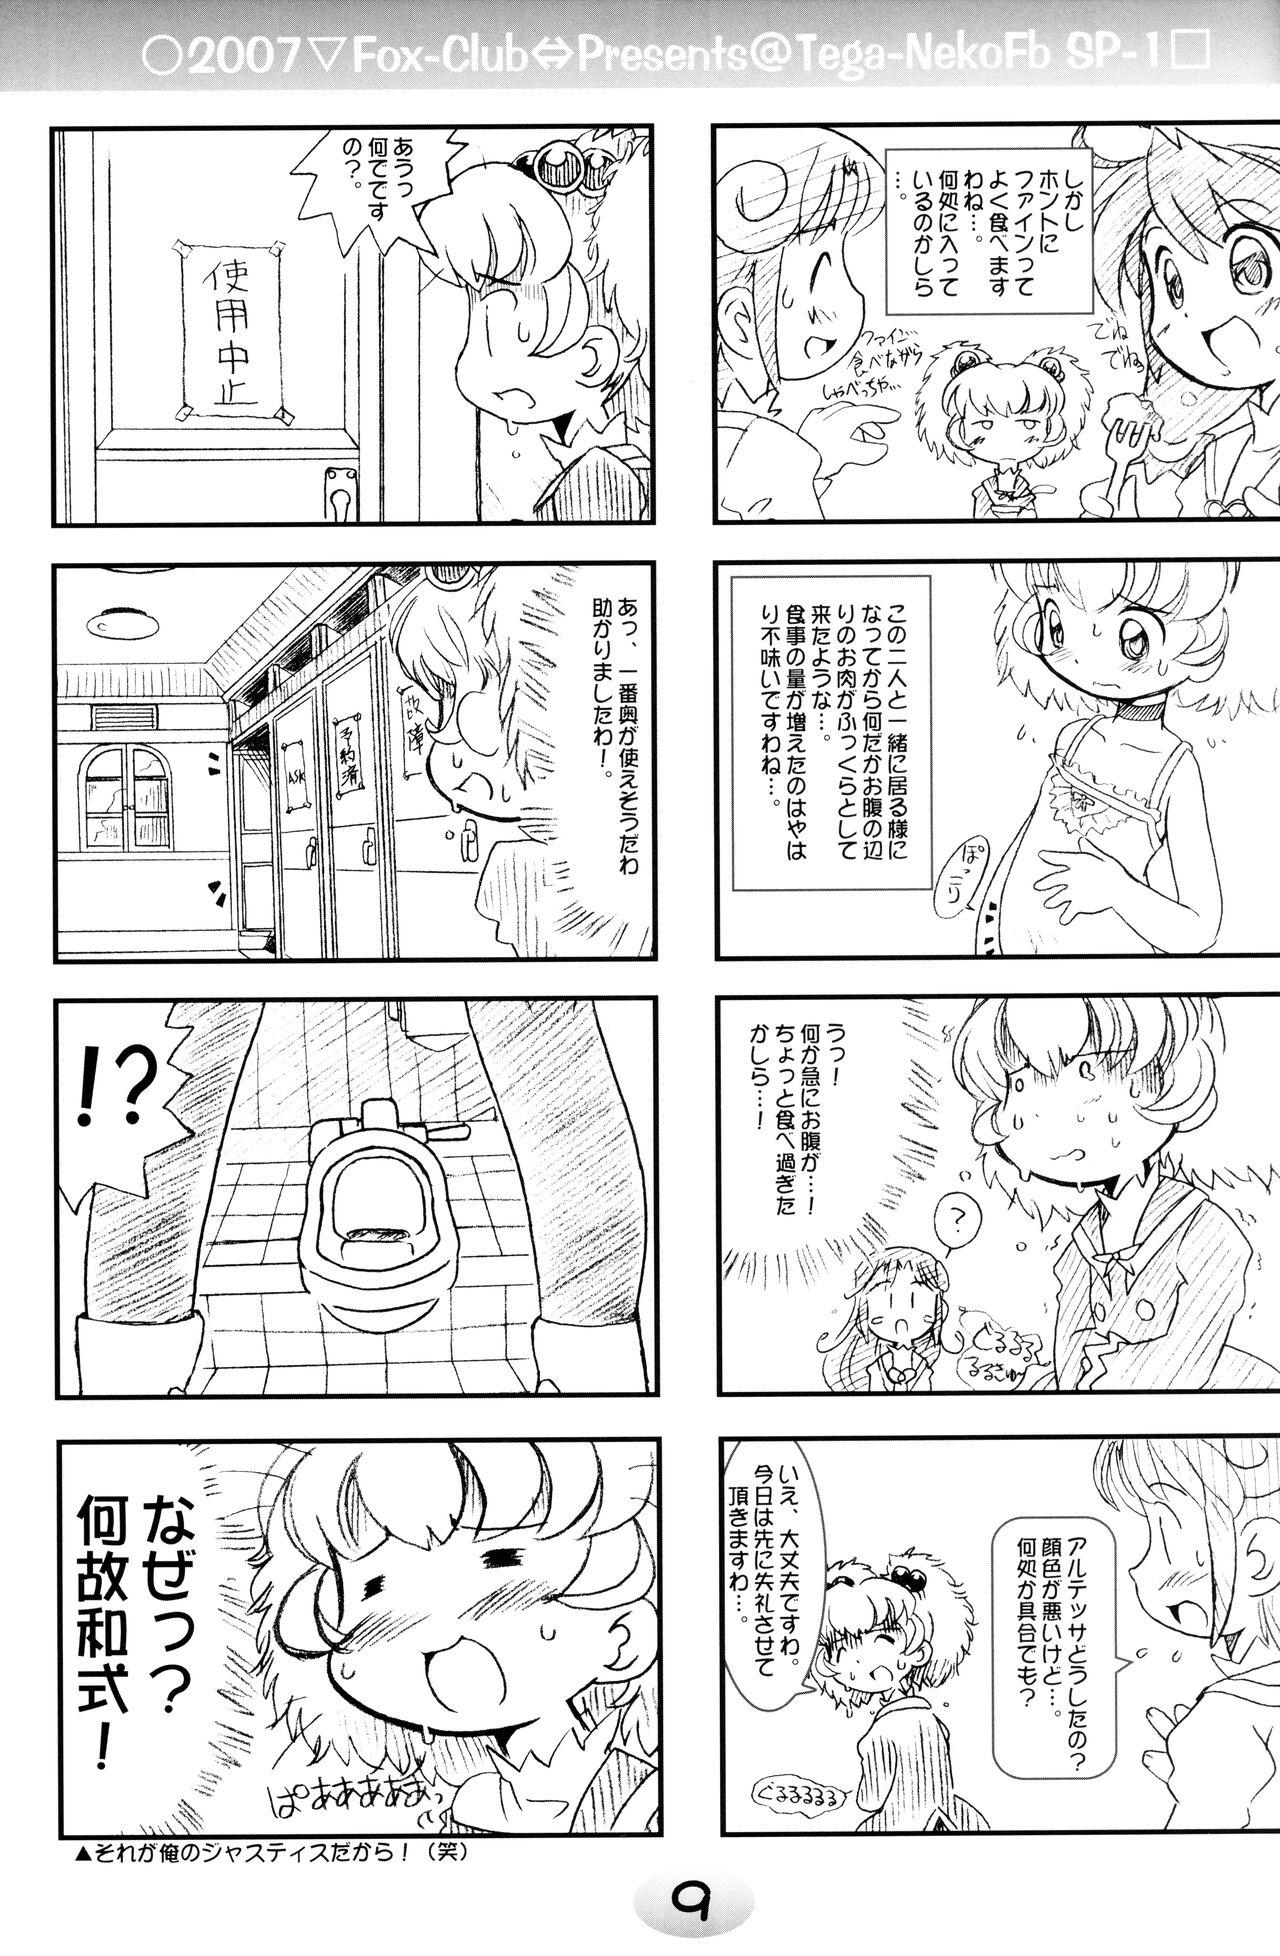 Blowing TeGa-NeKo Fb/SP Futago Hime Plus - Fushigiboshi no futagohime | twin princesses of the wonder planet Chat - Page 7